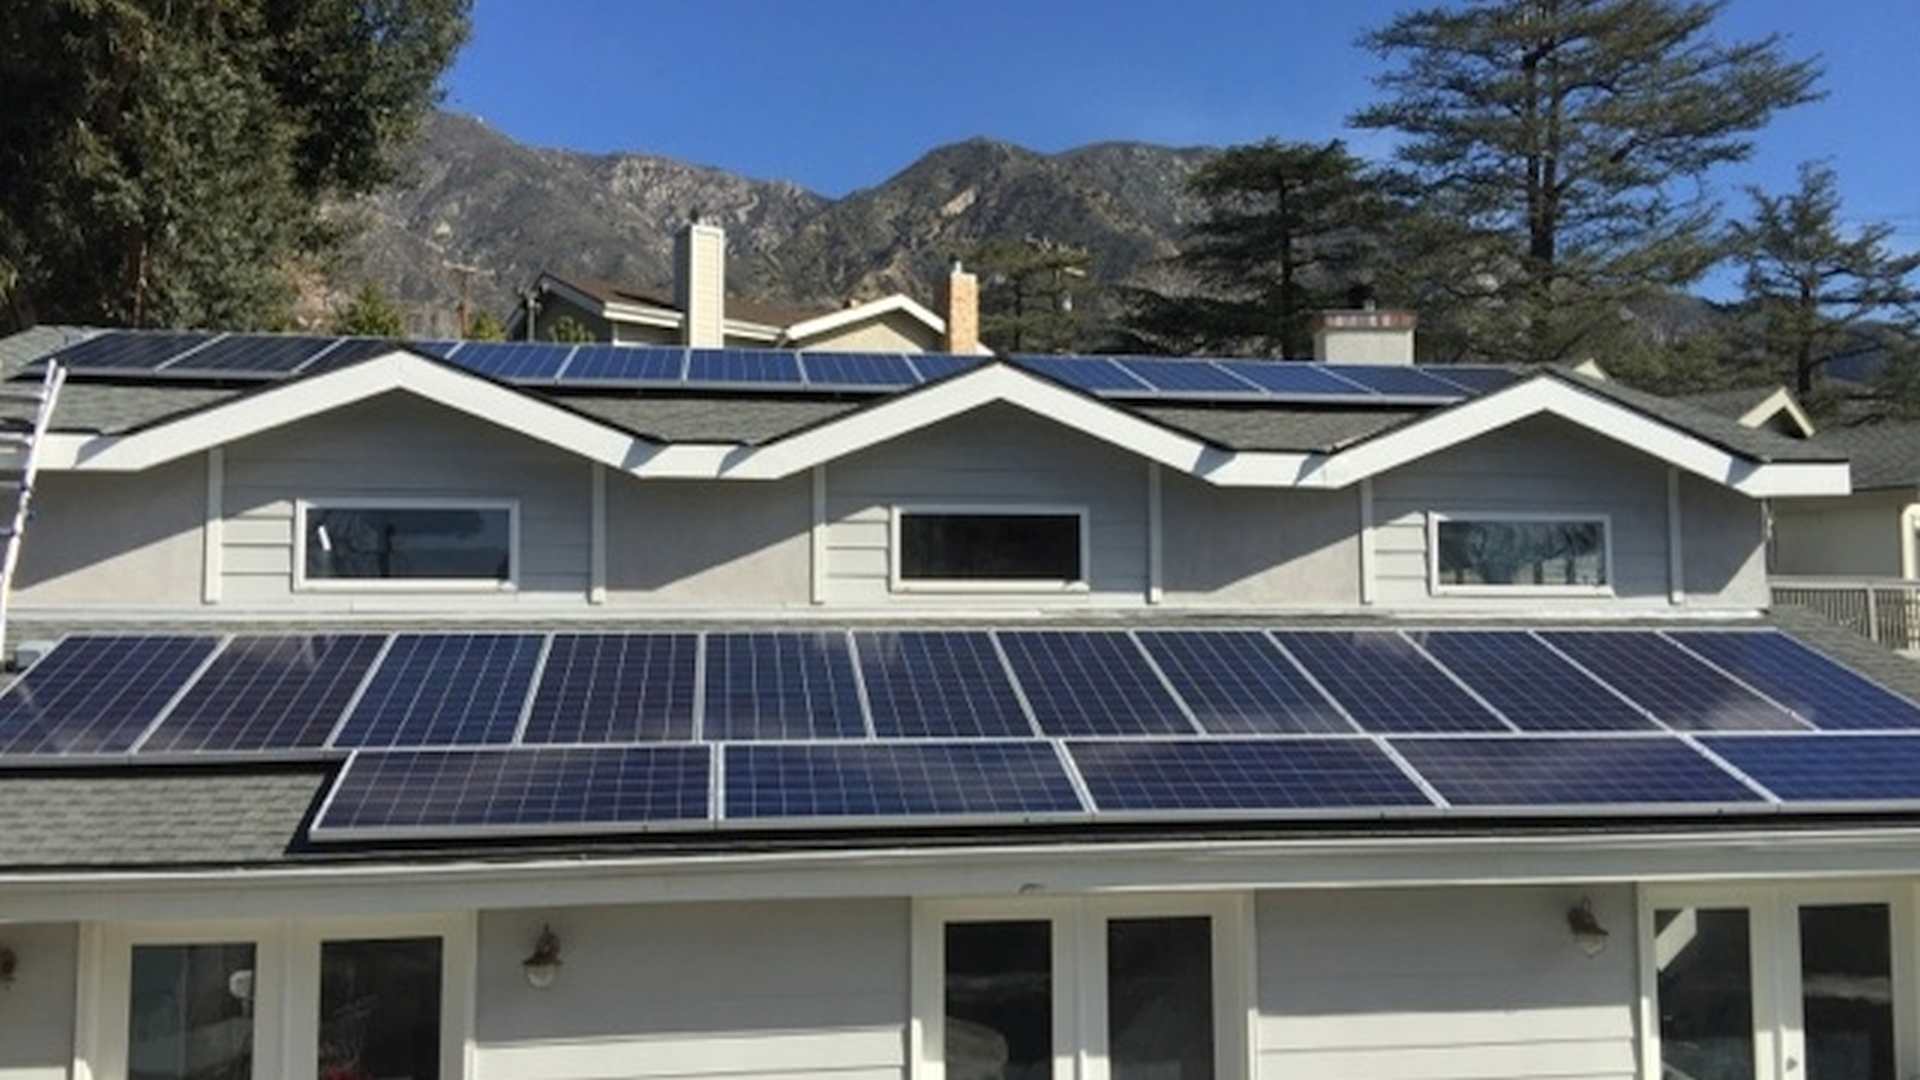 La Crescenta, Glendale, Los Angeles, California Solar, renewable energy, solar photovoltaic, residential solar pv